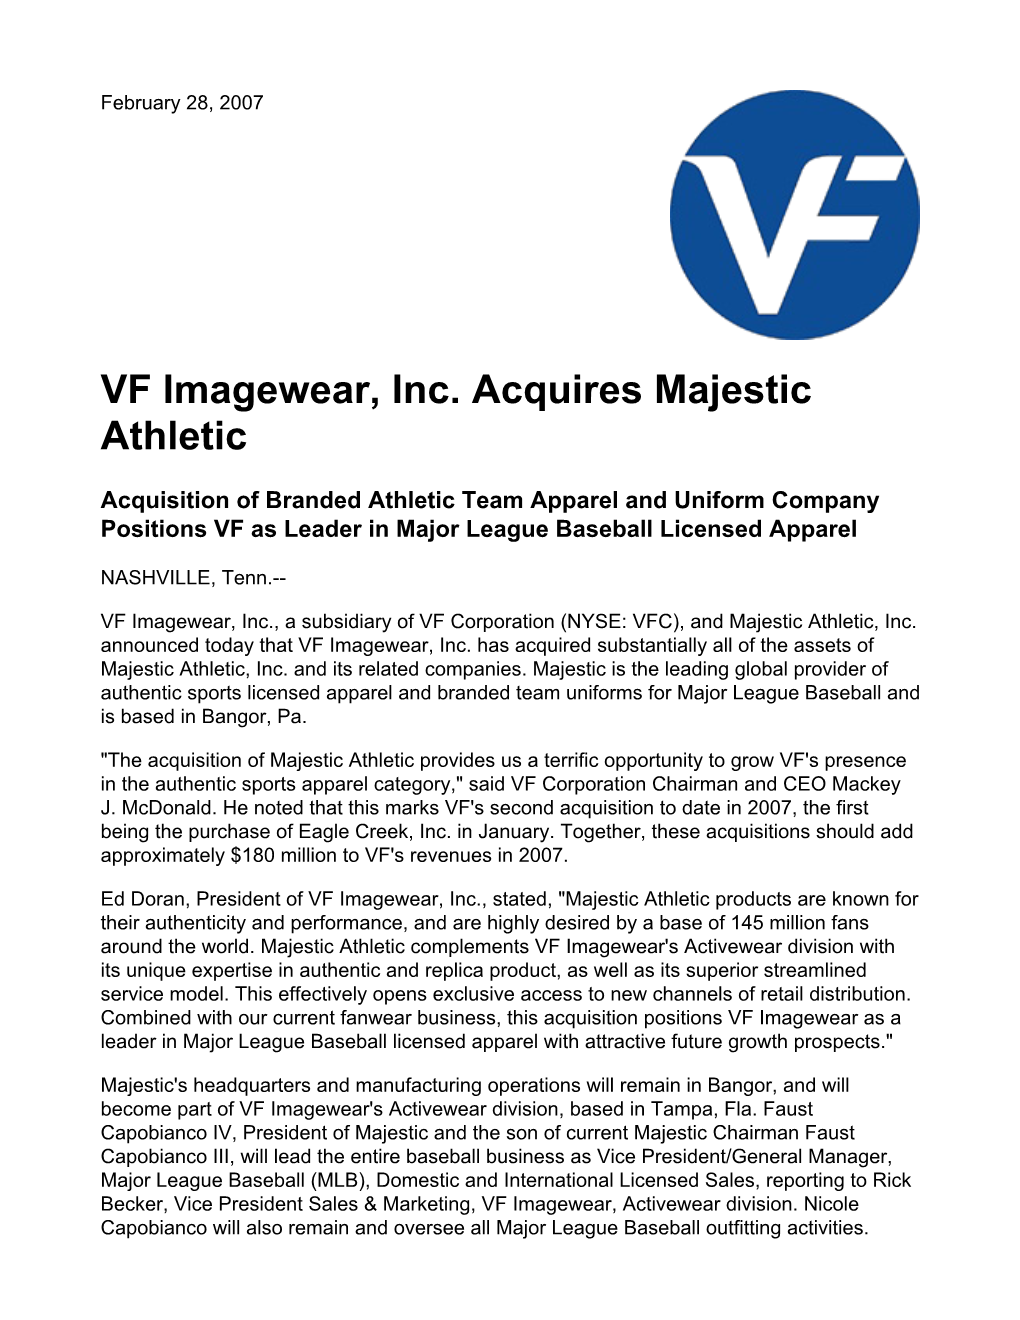 VF Imagewear, Inc. Acquires Majestic Athletic